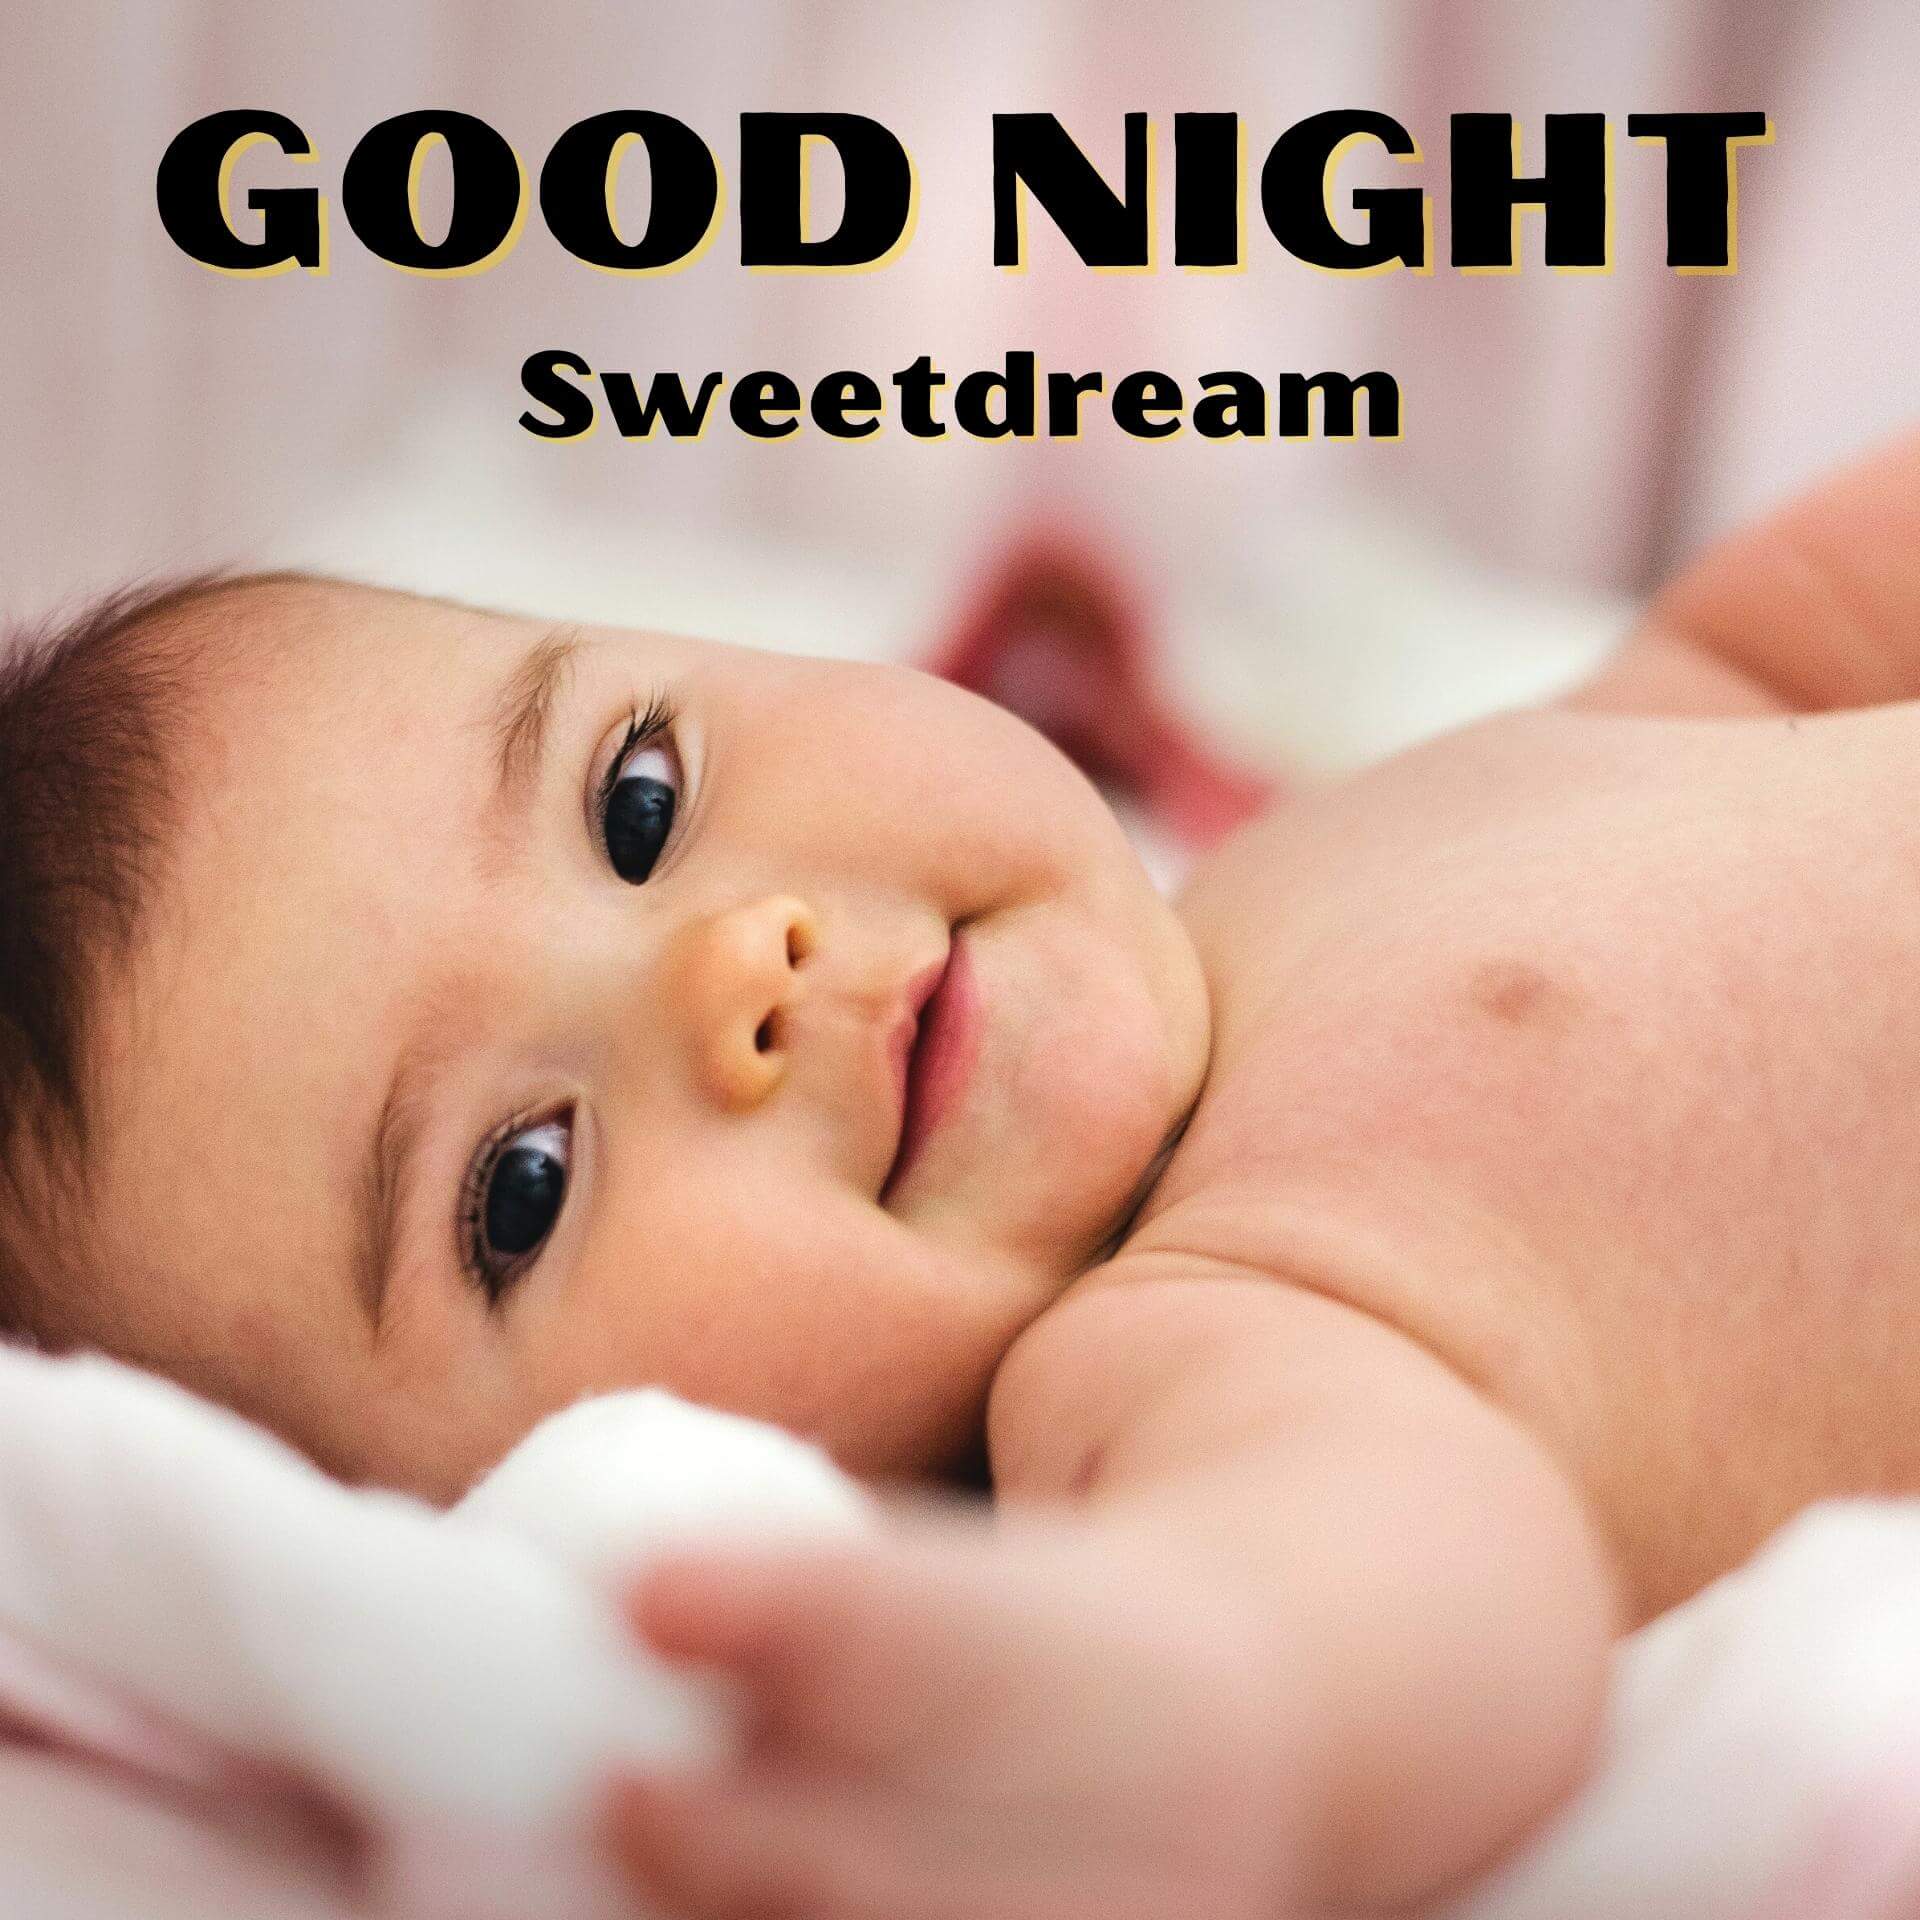 Cute Baby Good Night Wishes